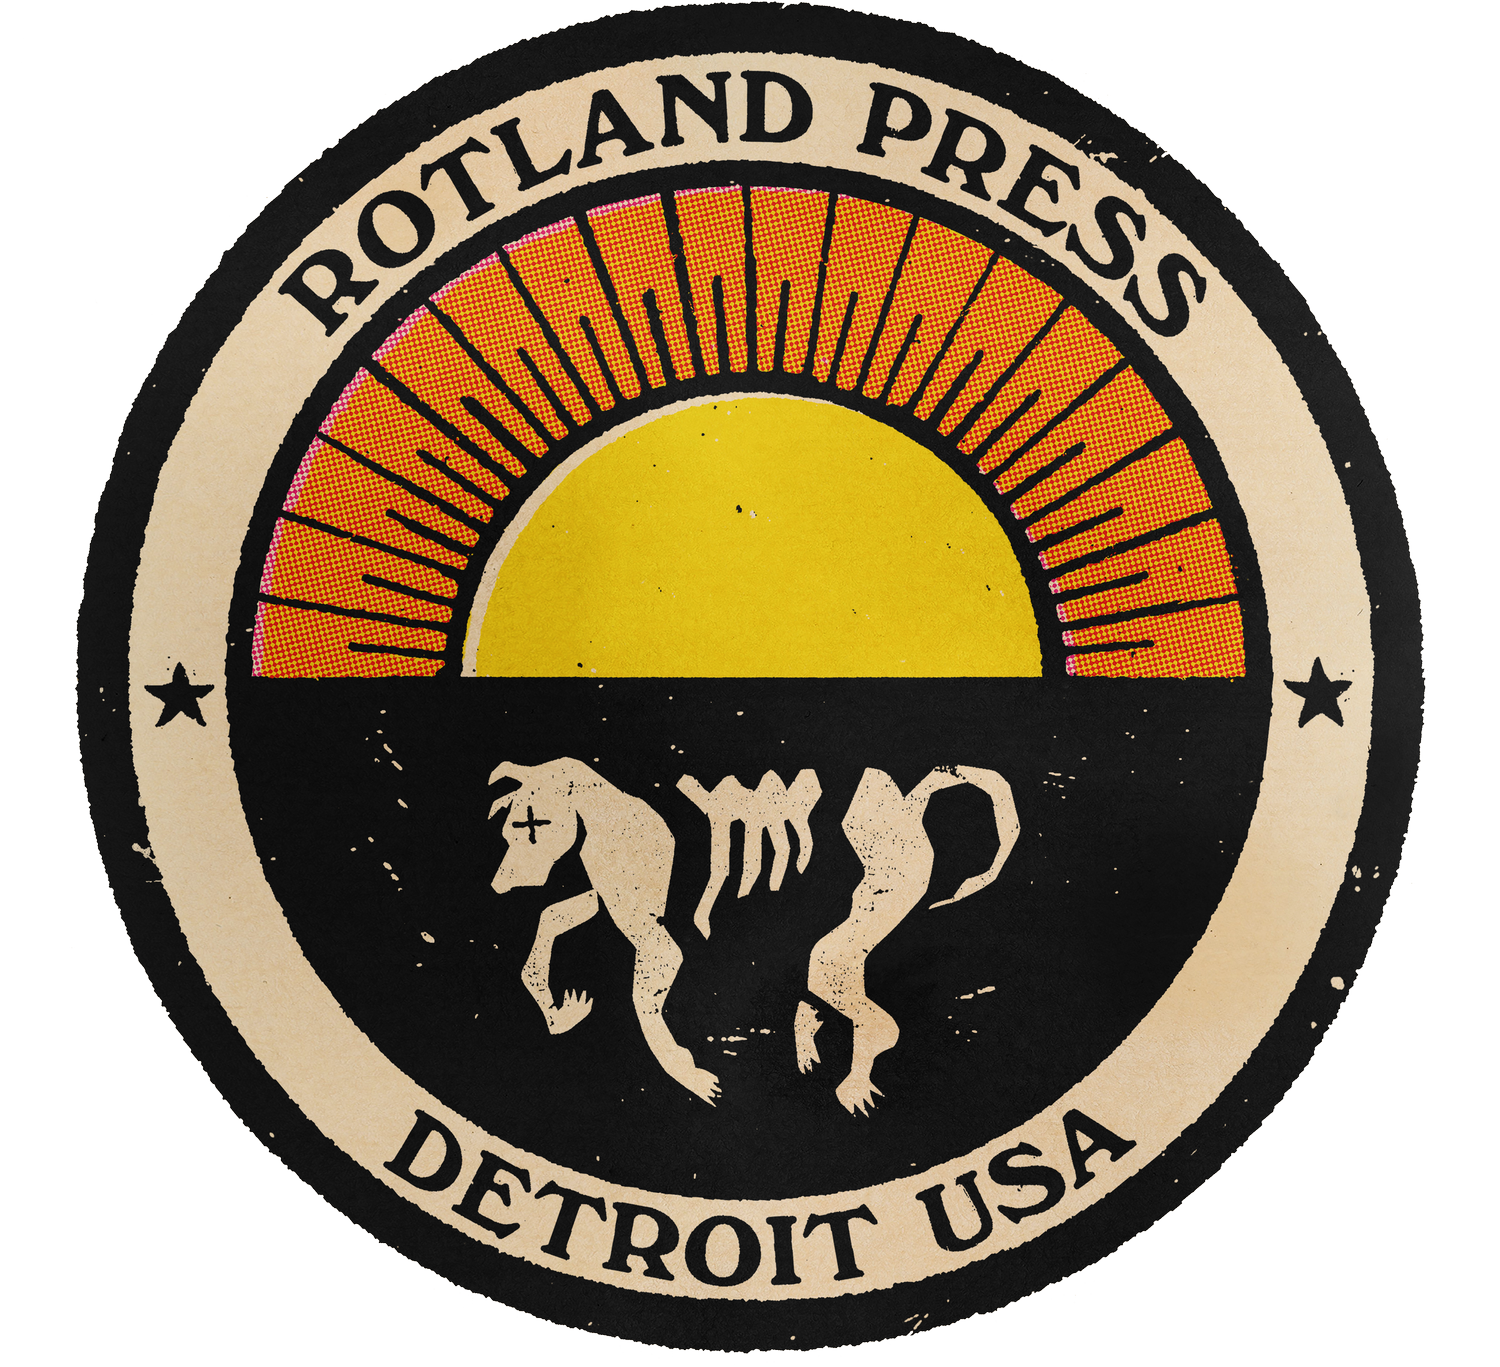 Rotland Press